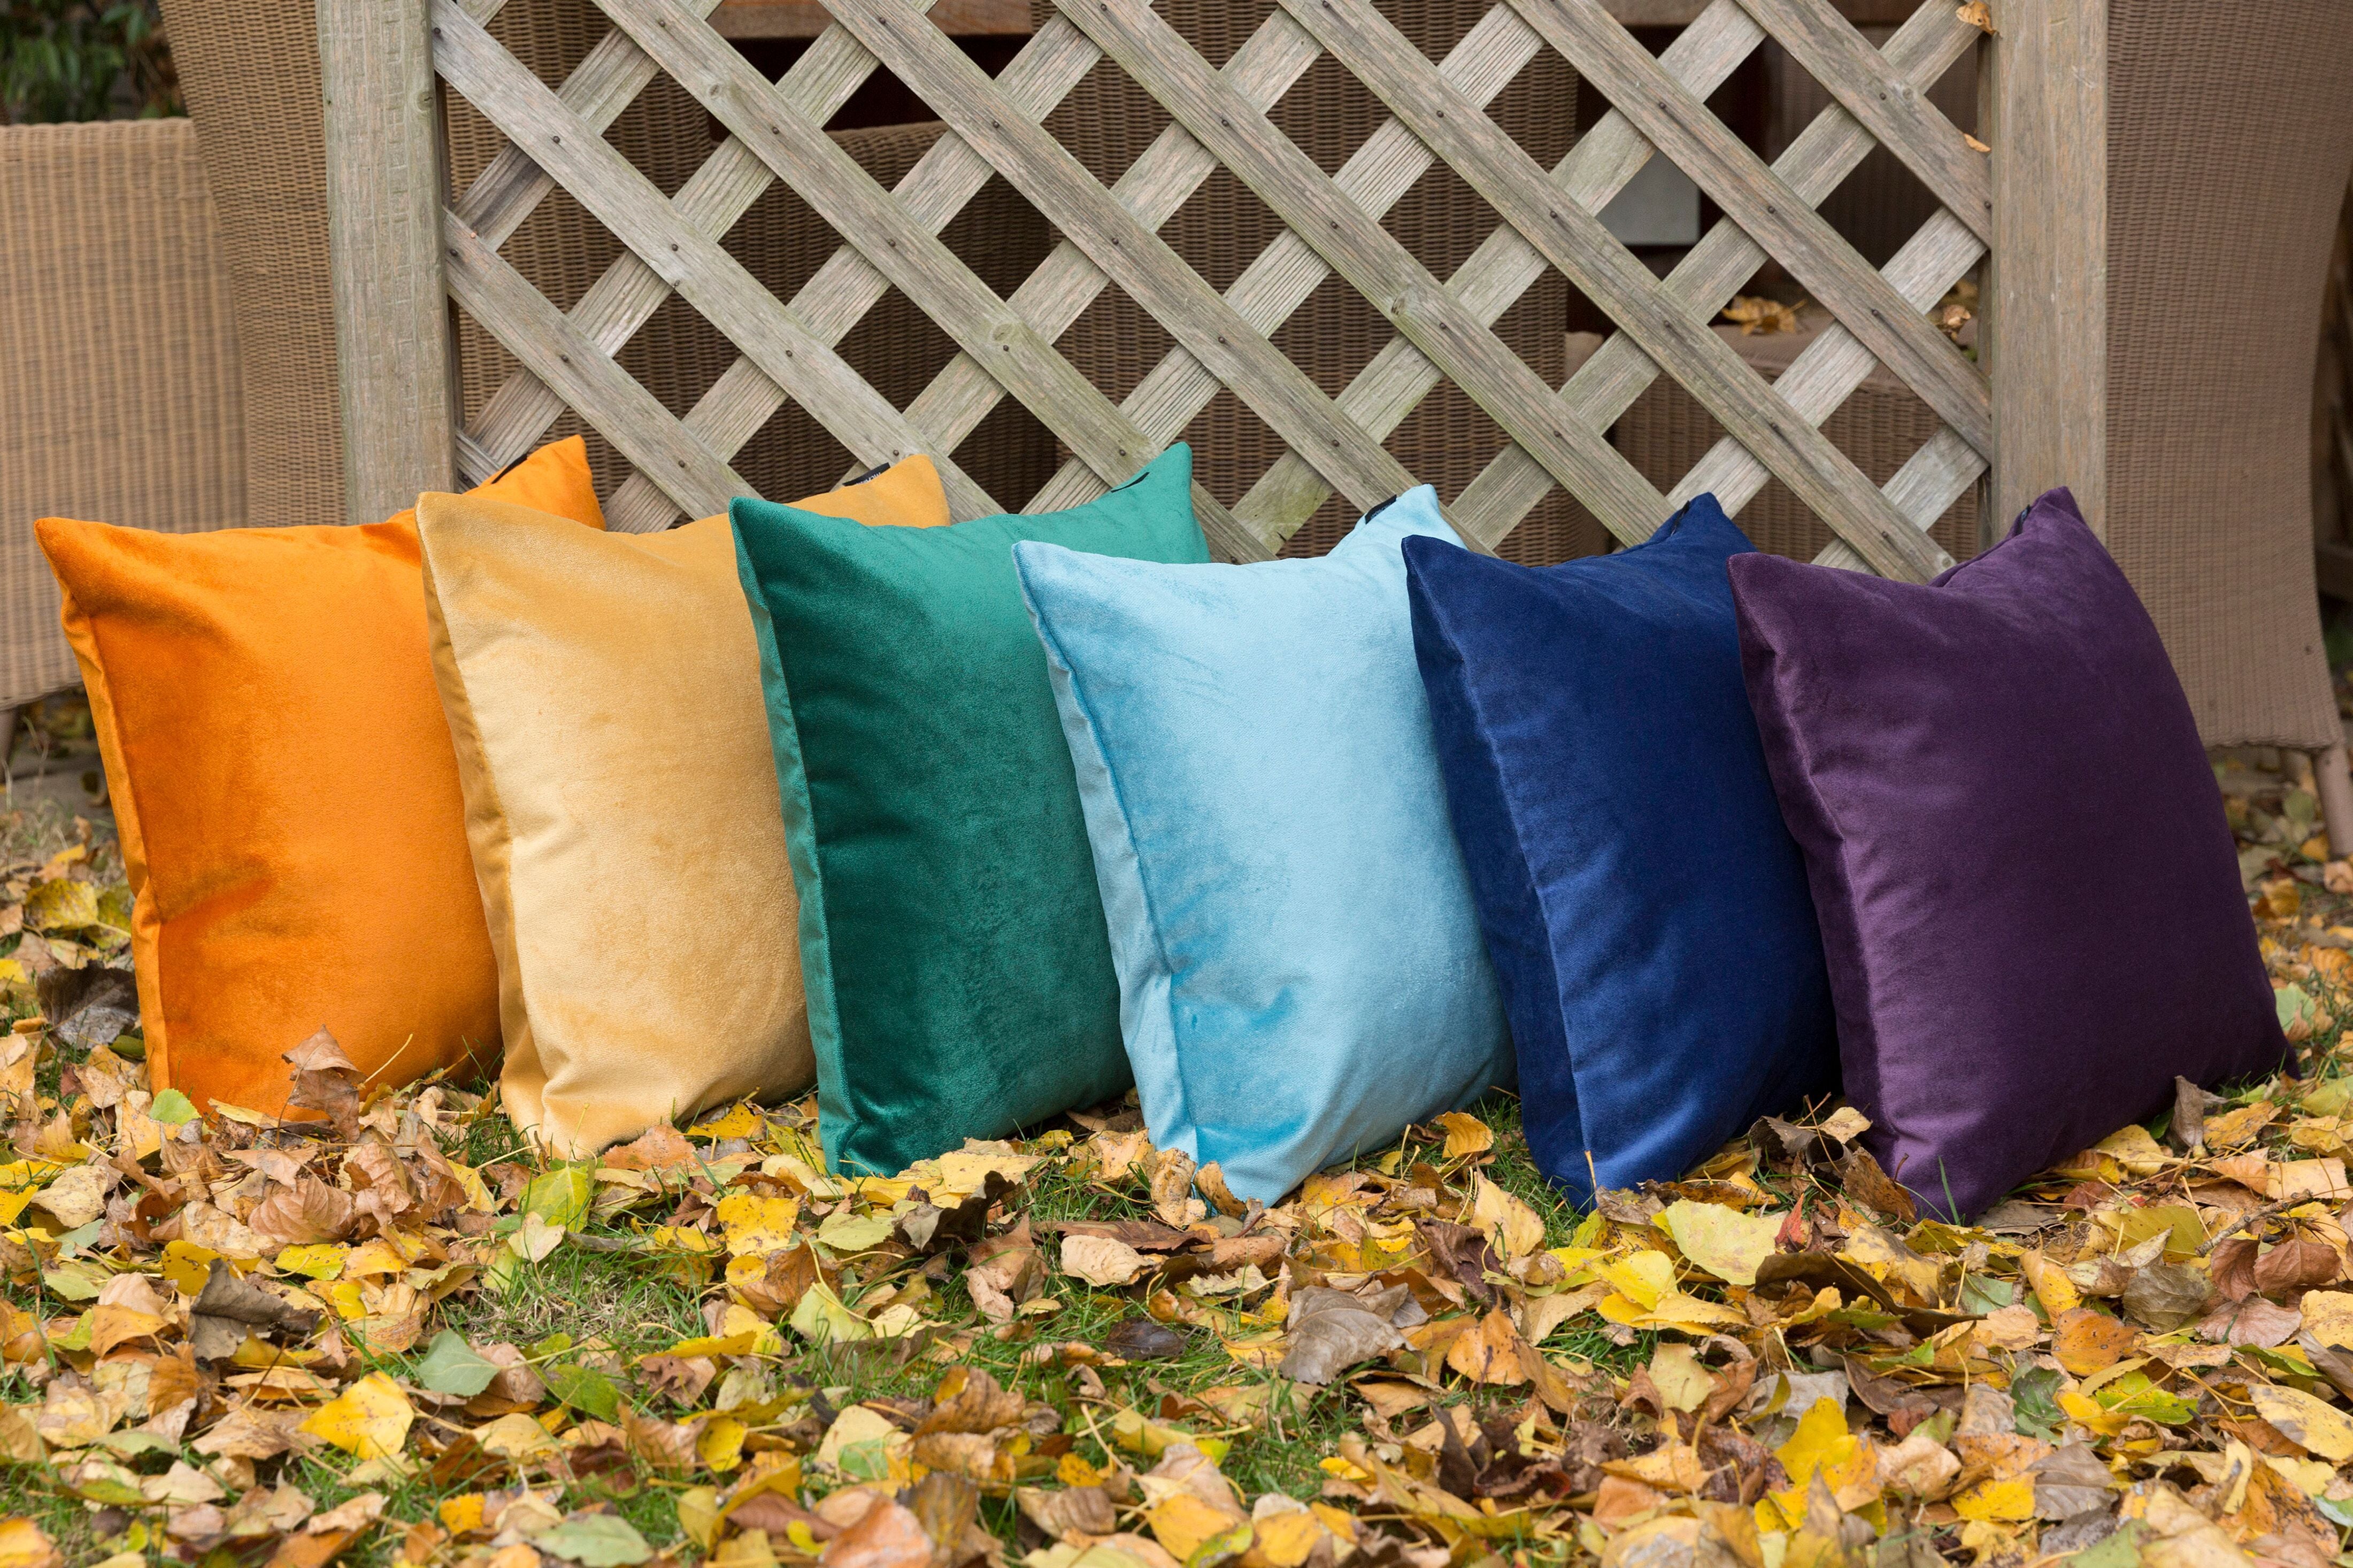 McAlister Textiles Matt Petrol Blue Velvet 43cm x 43cm Cushion Sets Cushions and Covers 